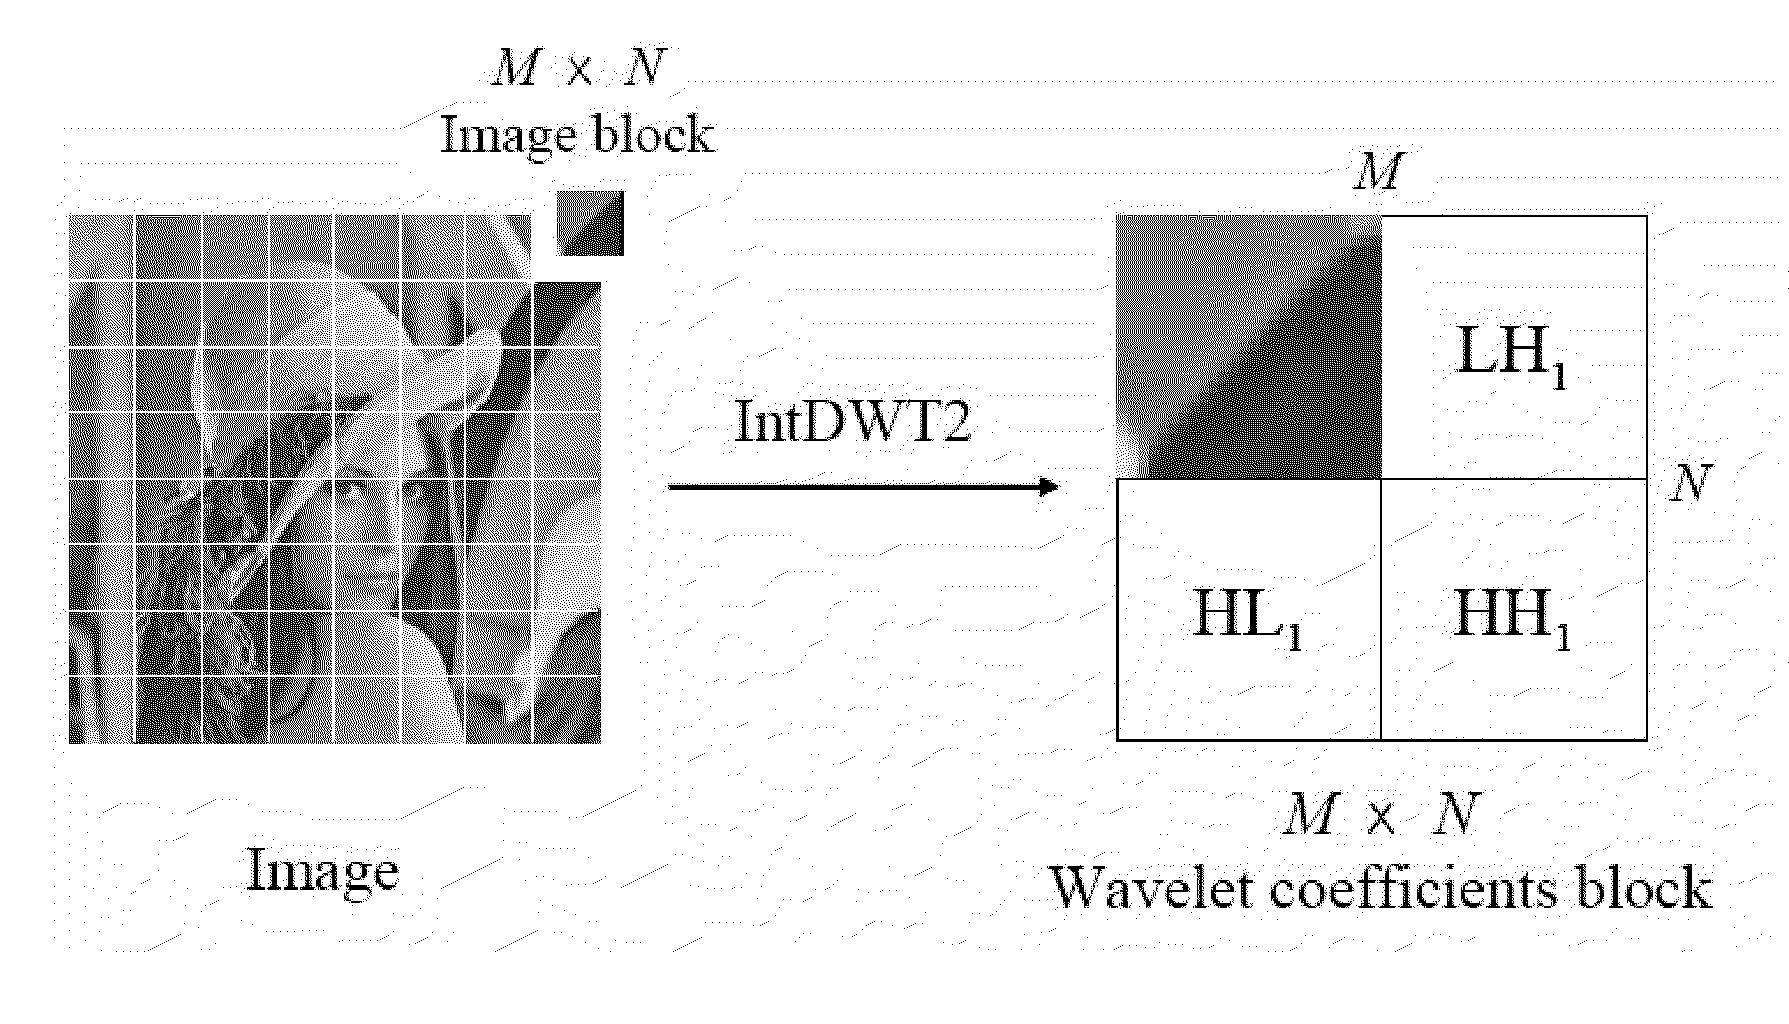 Method For Reversible Image Watermarking Based On Integer-to-Integer Wavelet Transform